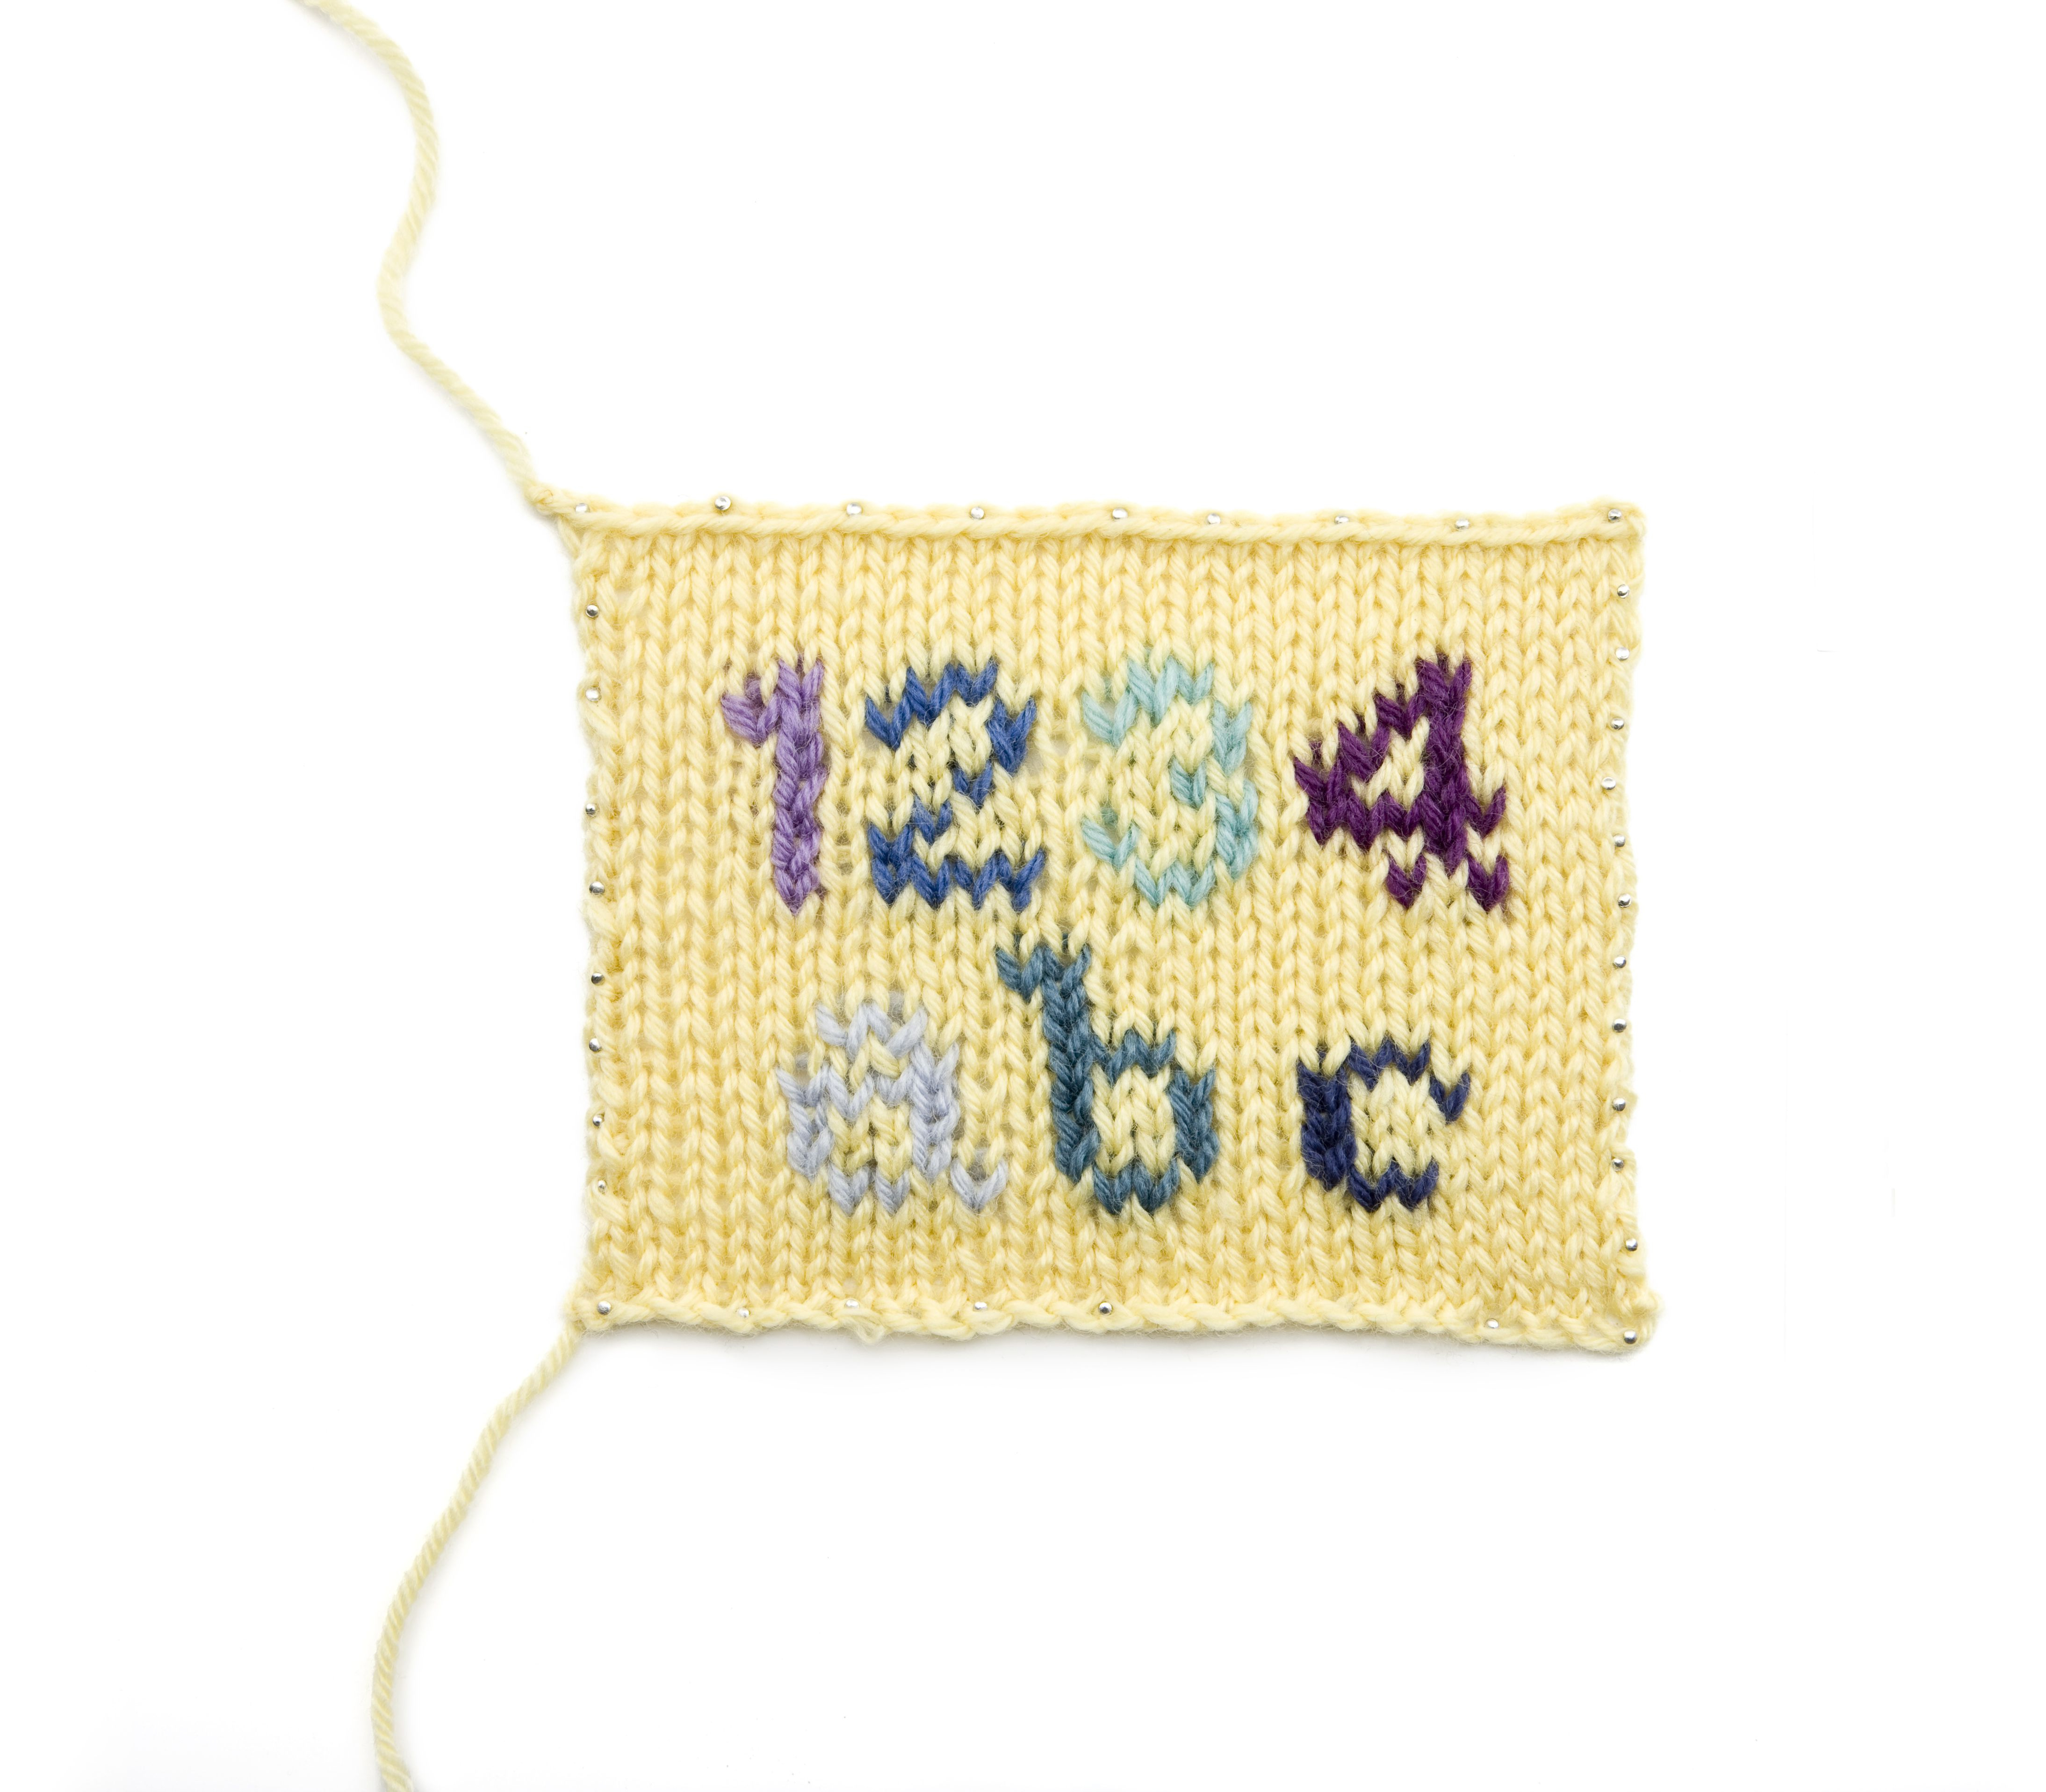 Graph Paper For Knitting Patterns Knitting Letters Upper Case Alphabet Chart